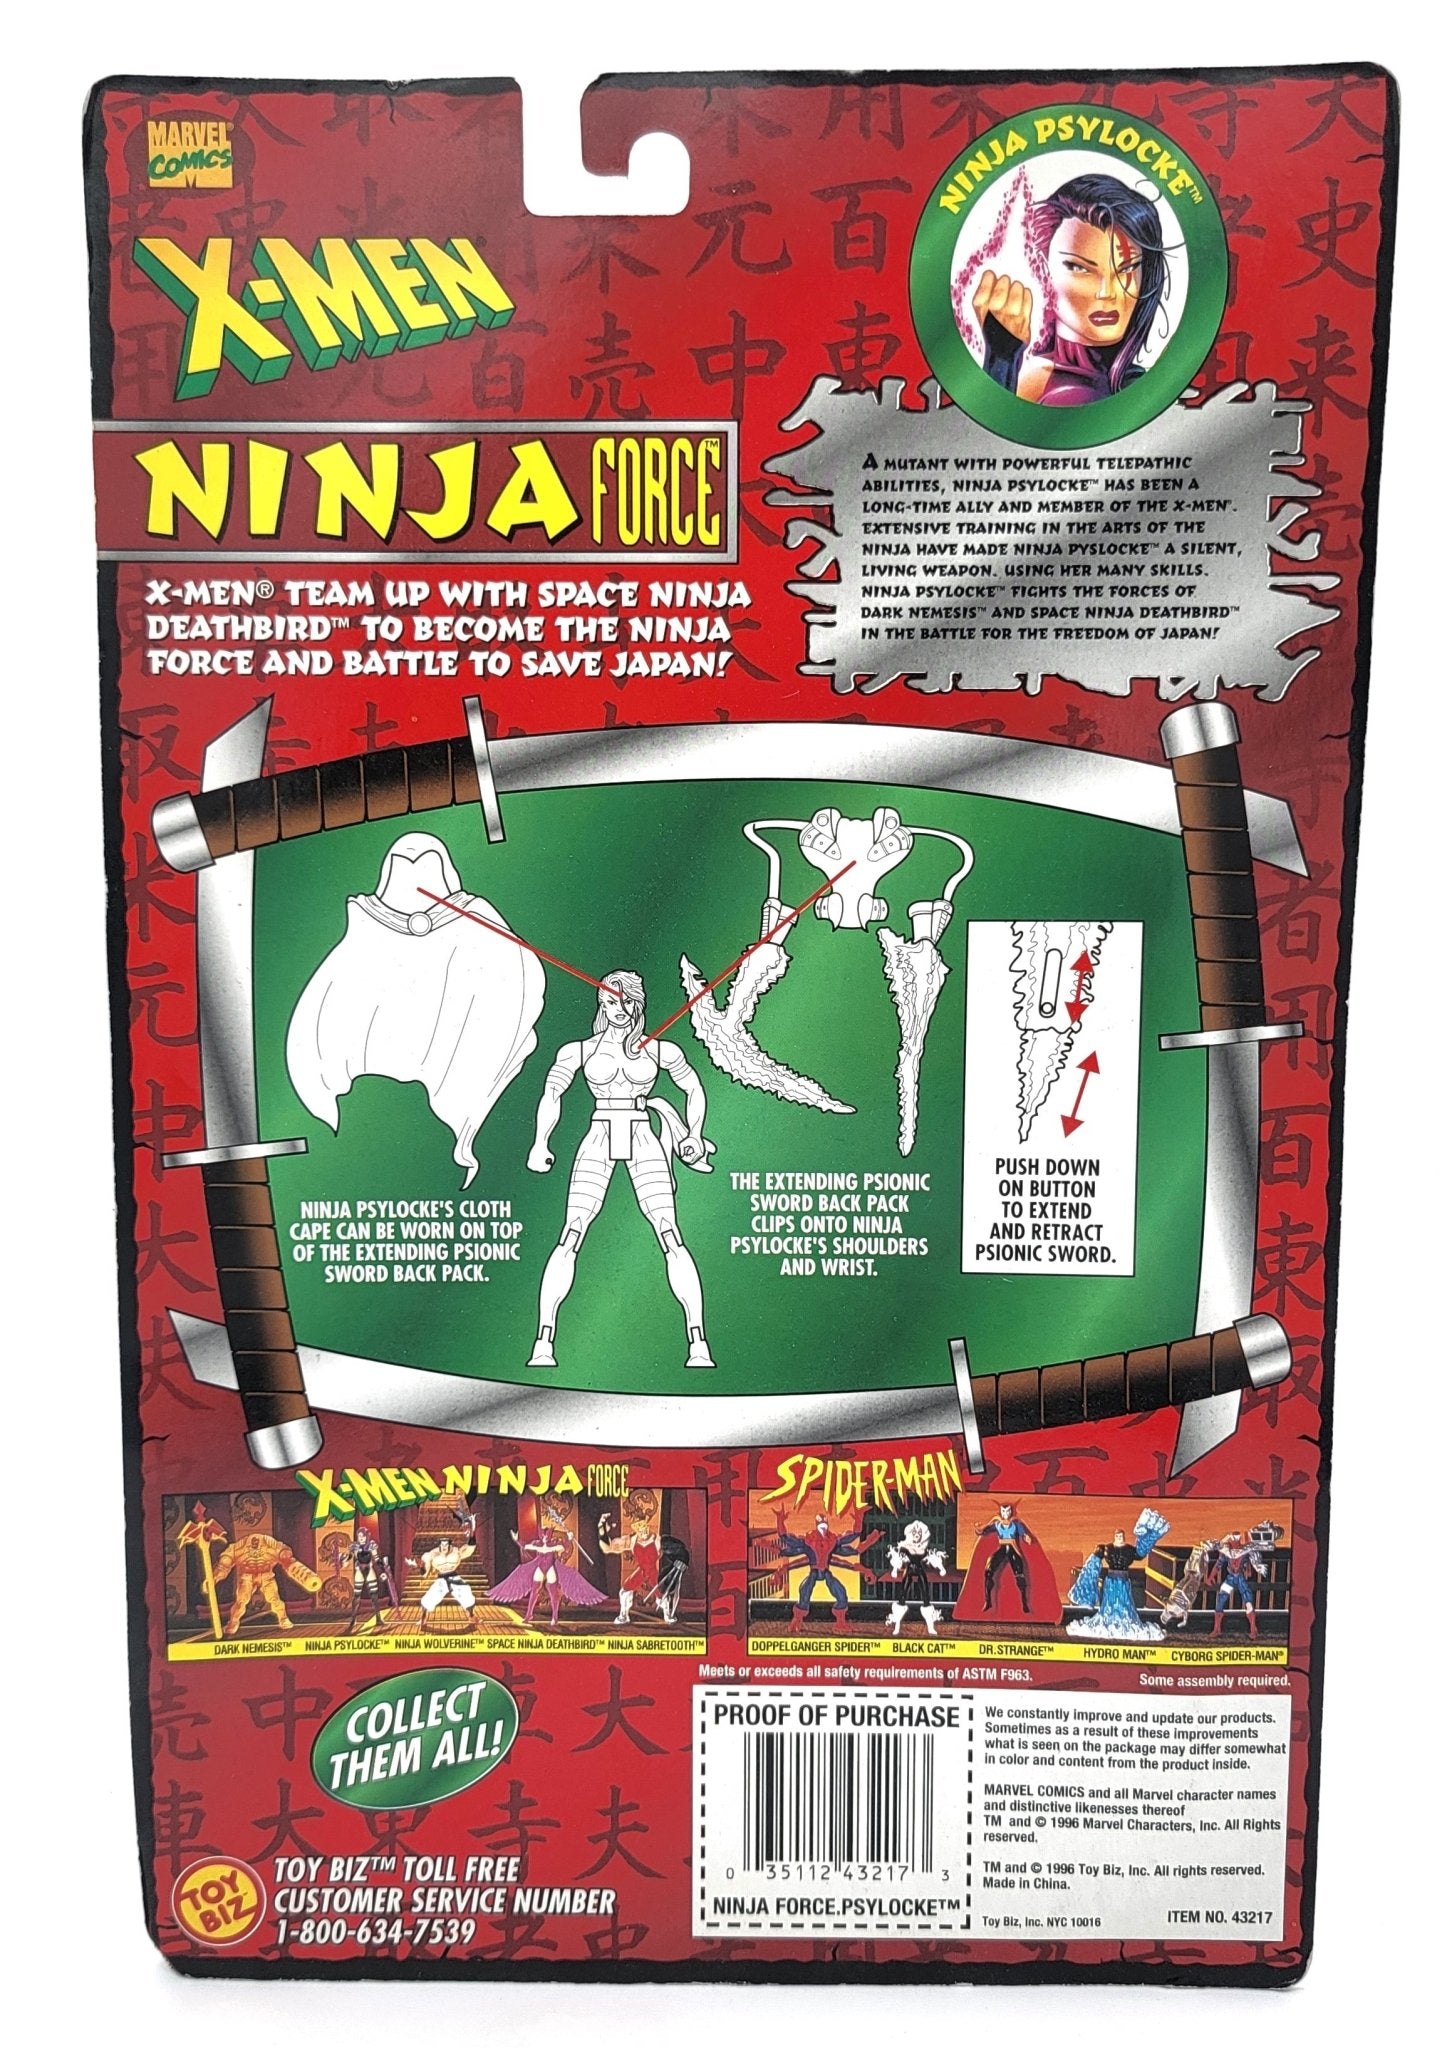 Toy Biz - Toy Biz | X-Men Ninja Psylocke 1996 | Ninja Force | Vintage Marvel Action Figure - Action Figures - Steady Bunny Shop